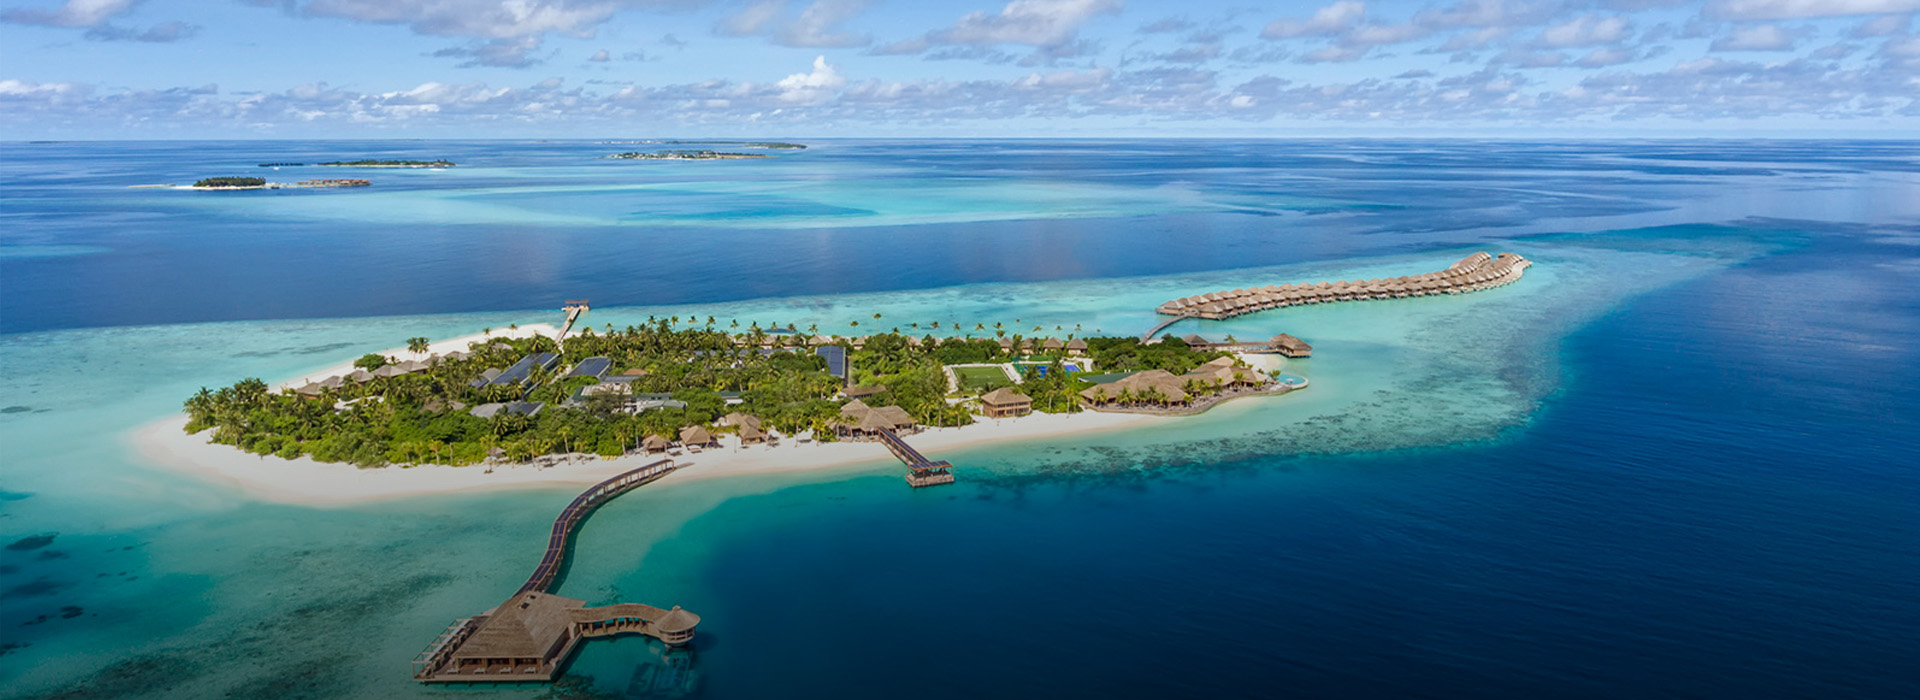 An Exciting 4 Nights and 5 Days Maldives Holiday Package from Saudi Arabia - Hurawalhi Island Resort